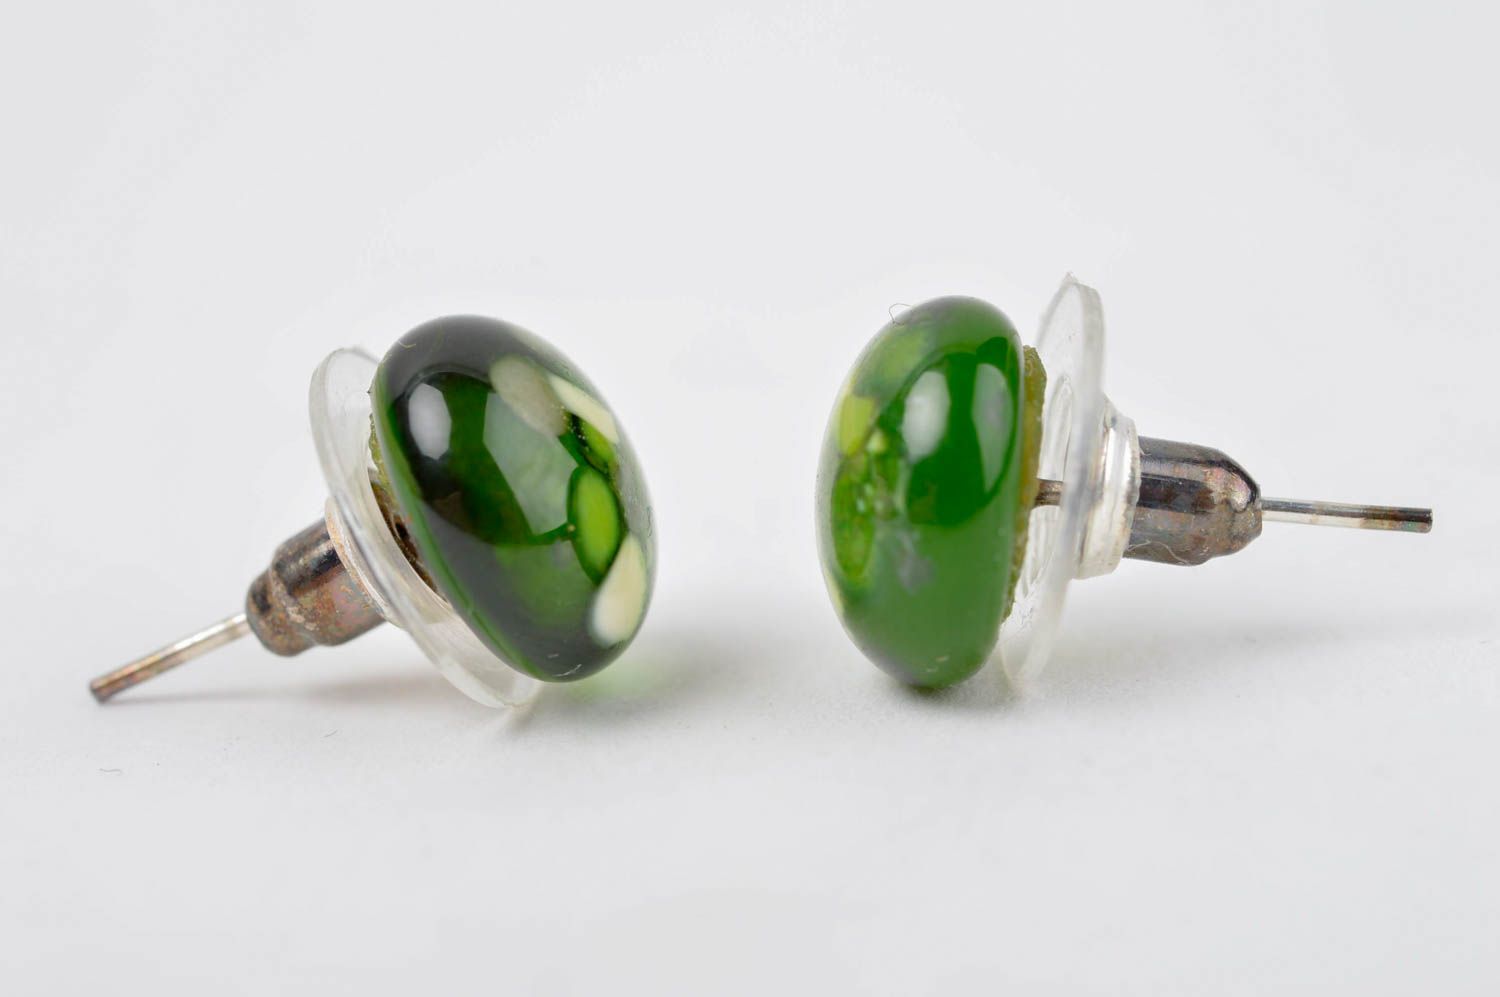 Handmade glass earrings stud earrings design artisan jewelry gifts for her photo 2